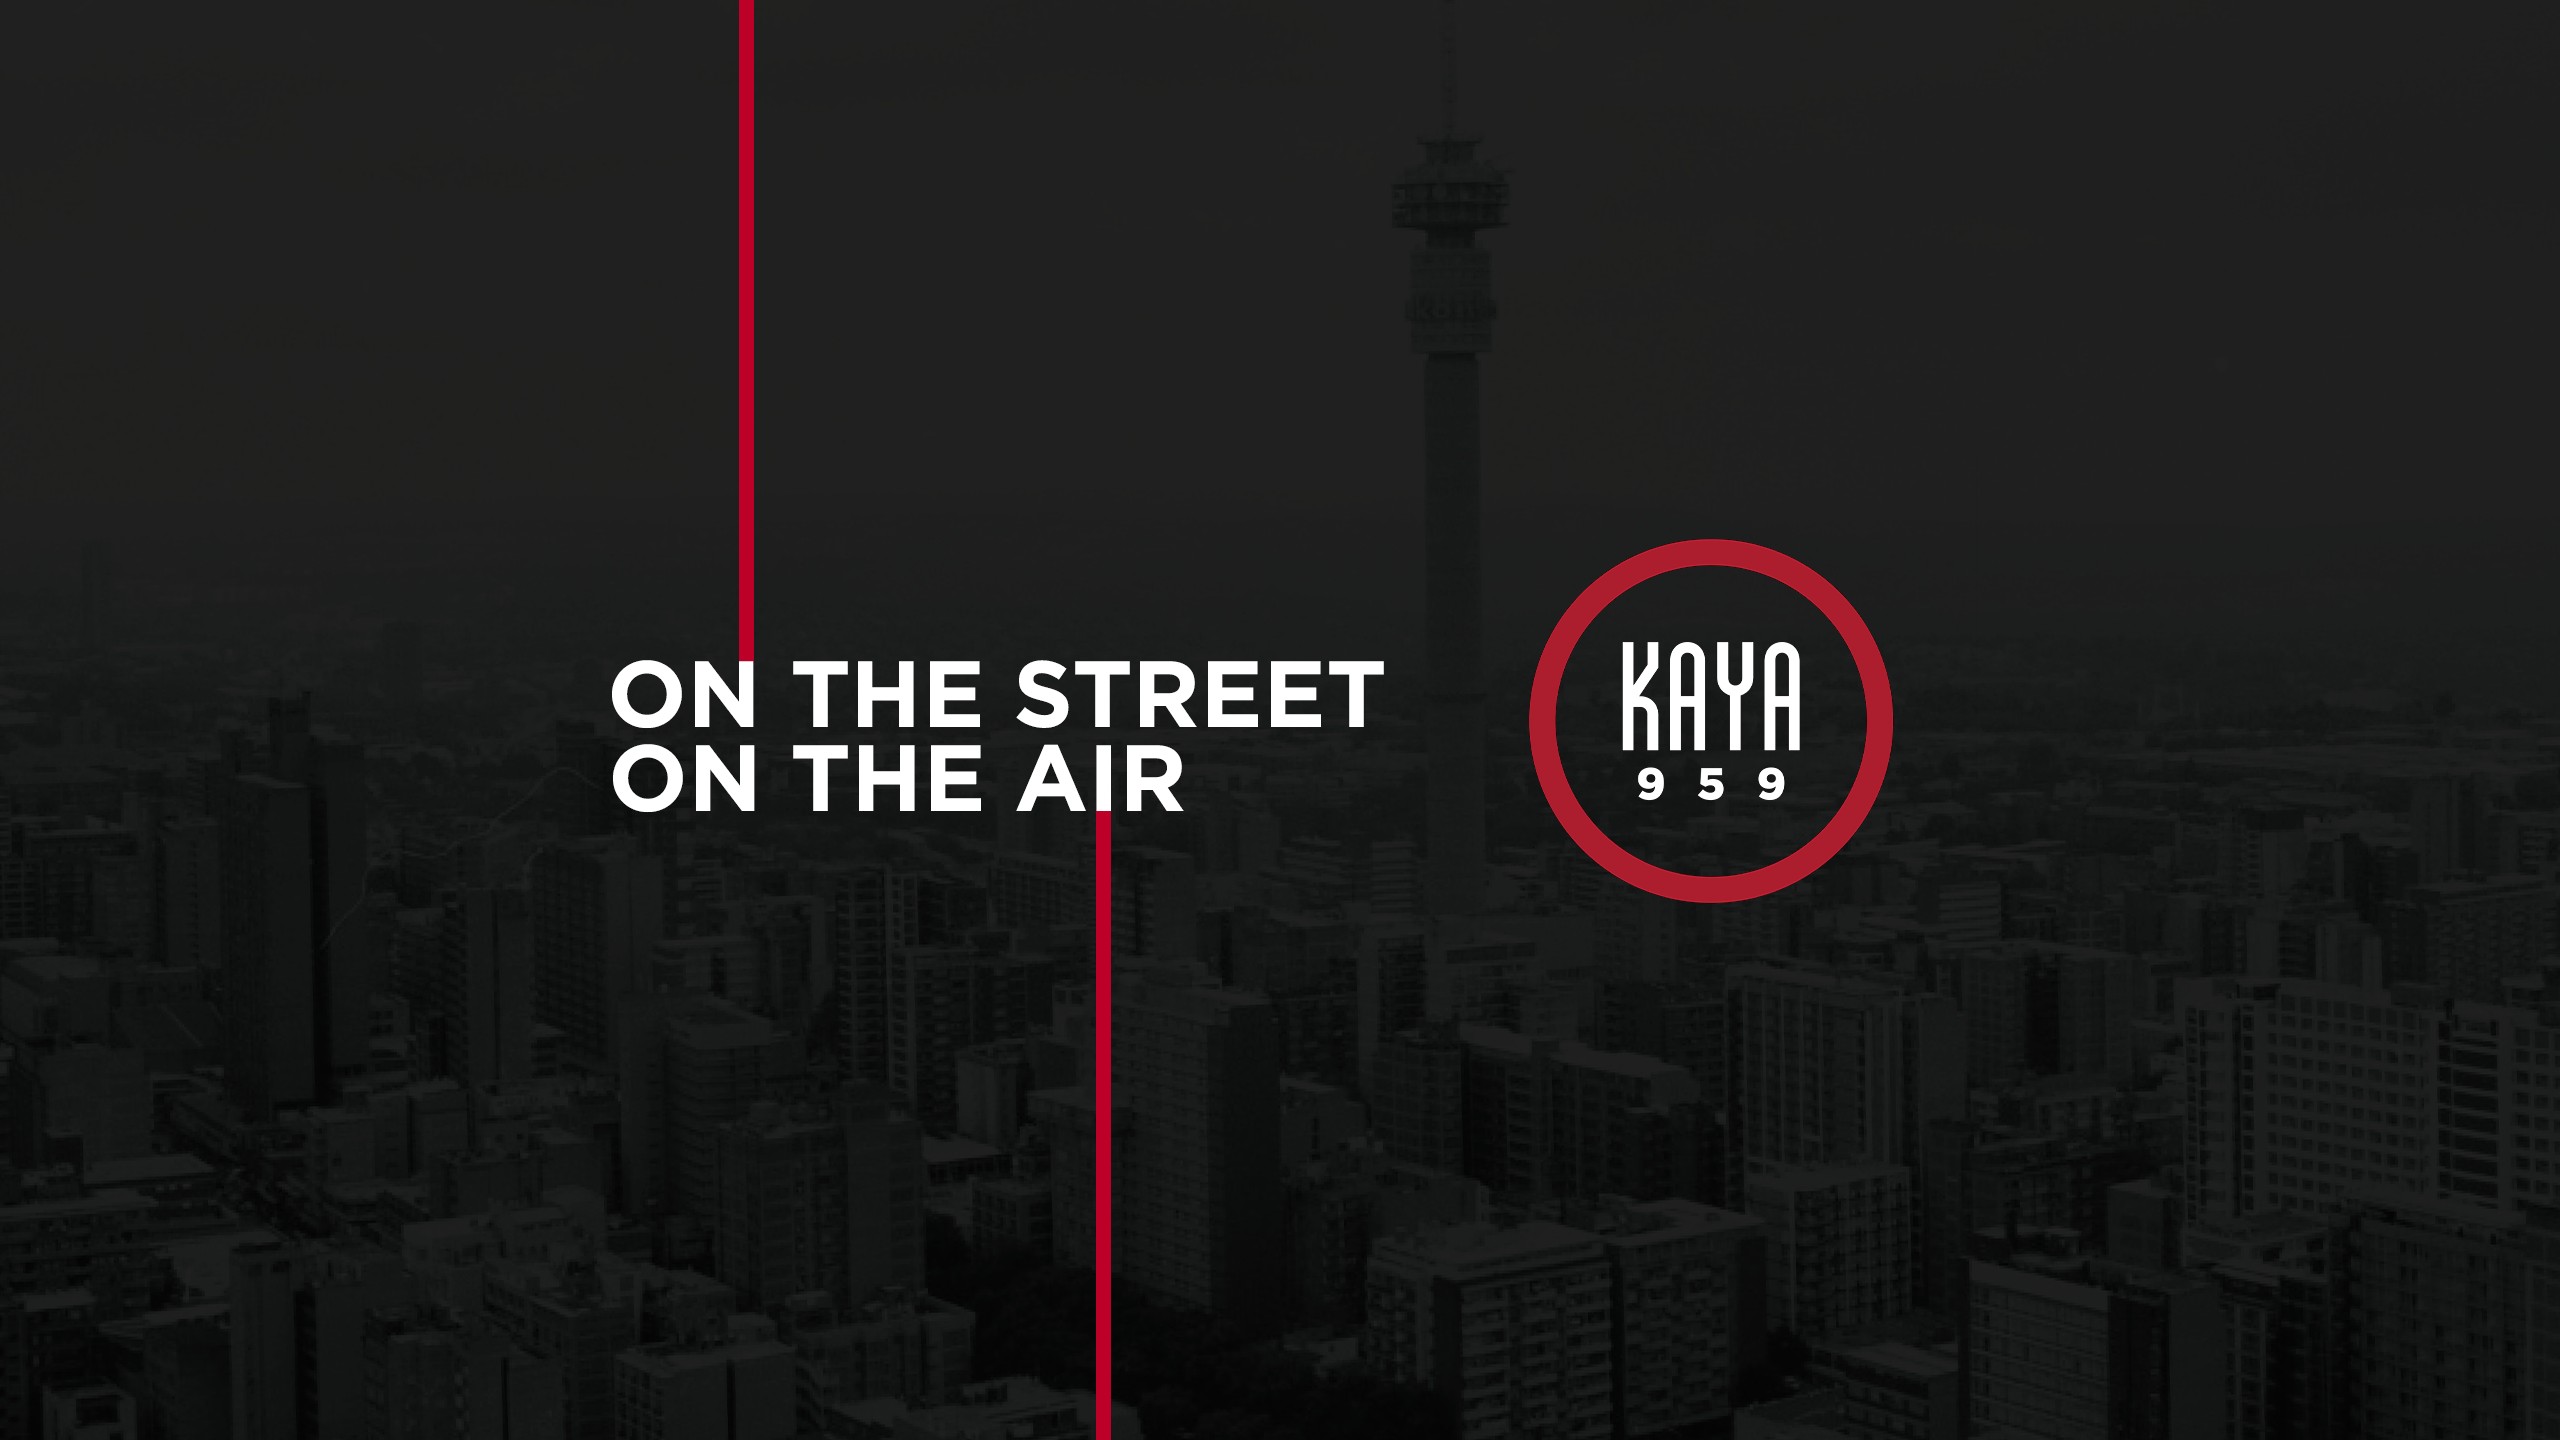 Kaya 959 new line-up announcement